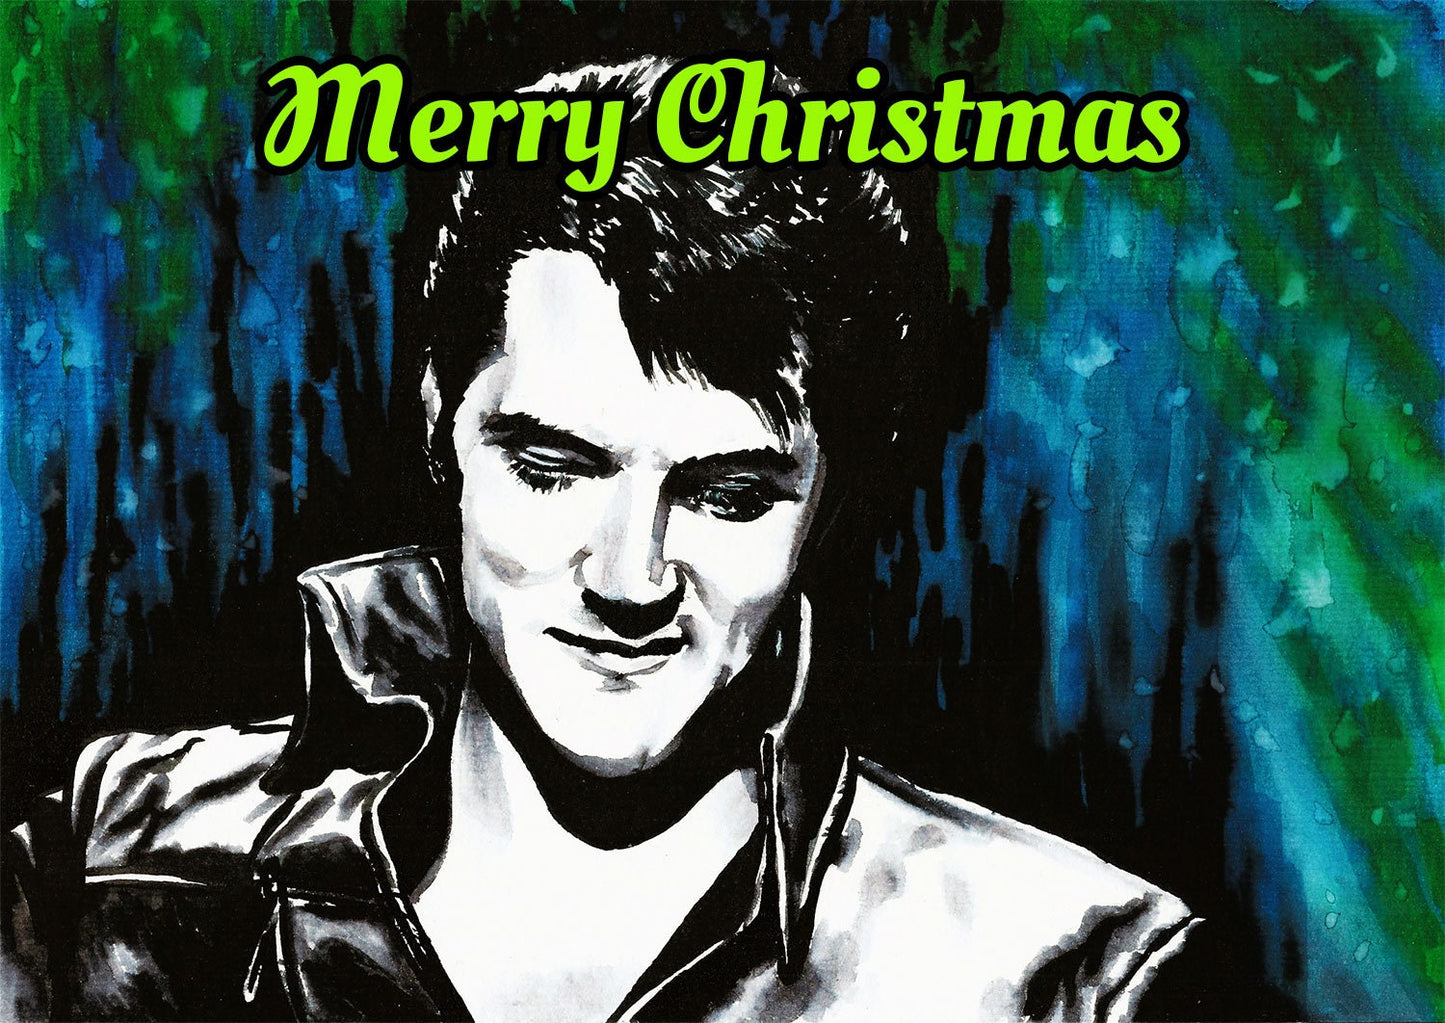 Elvis Presley Christmas card, King of Rock and Roll, Rock Music card, Elvis card, Gift for Elvis fans, Elvis Christmas gift